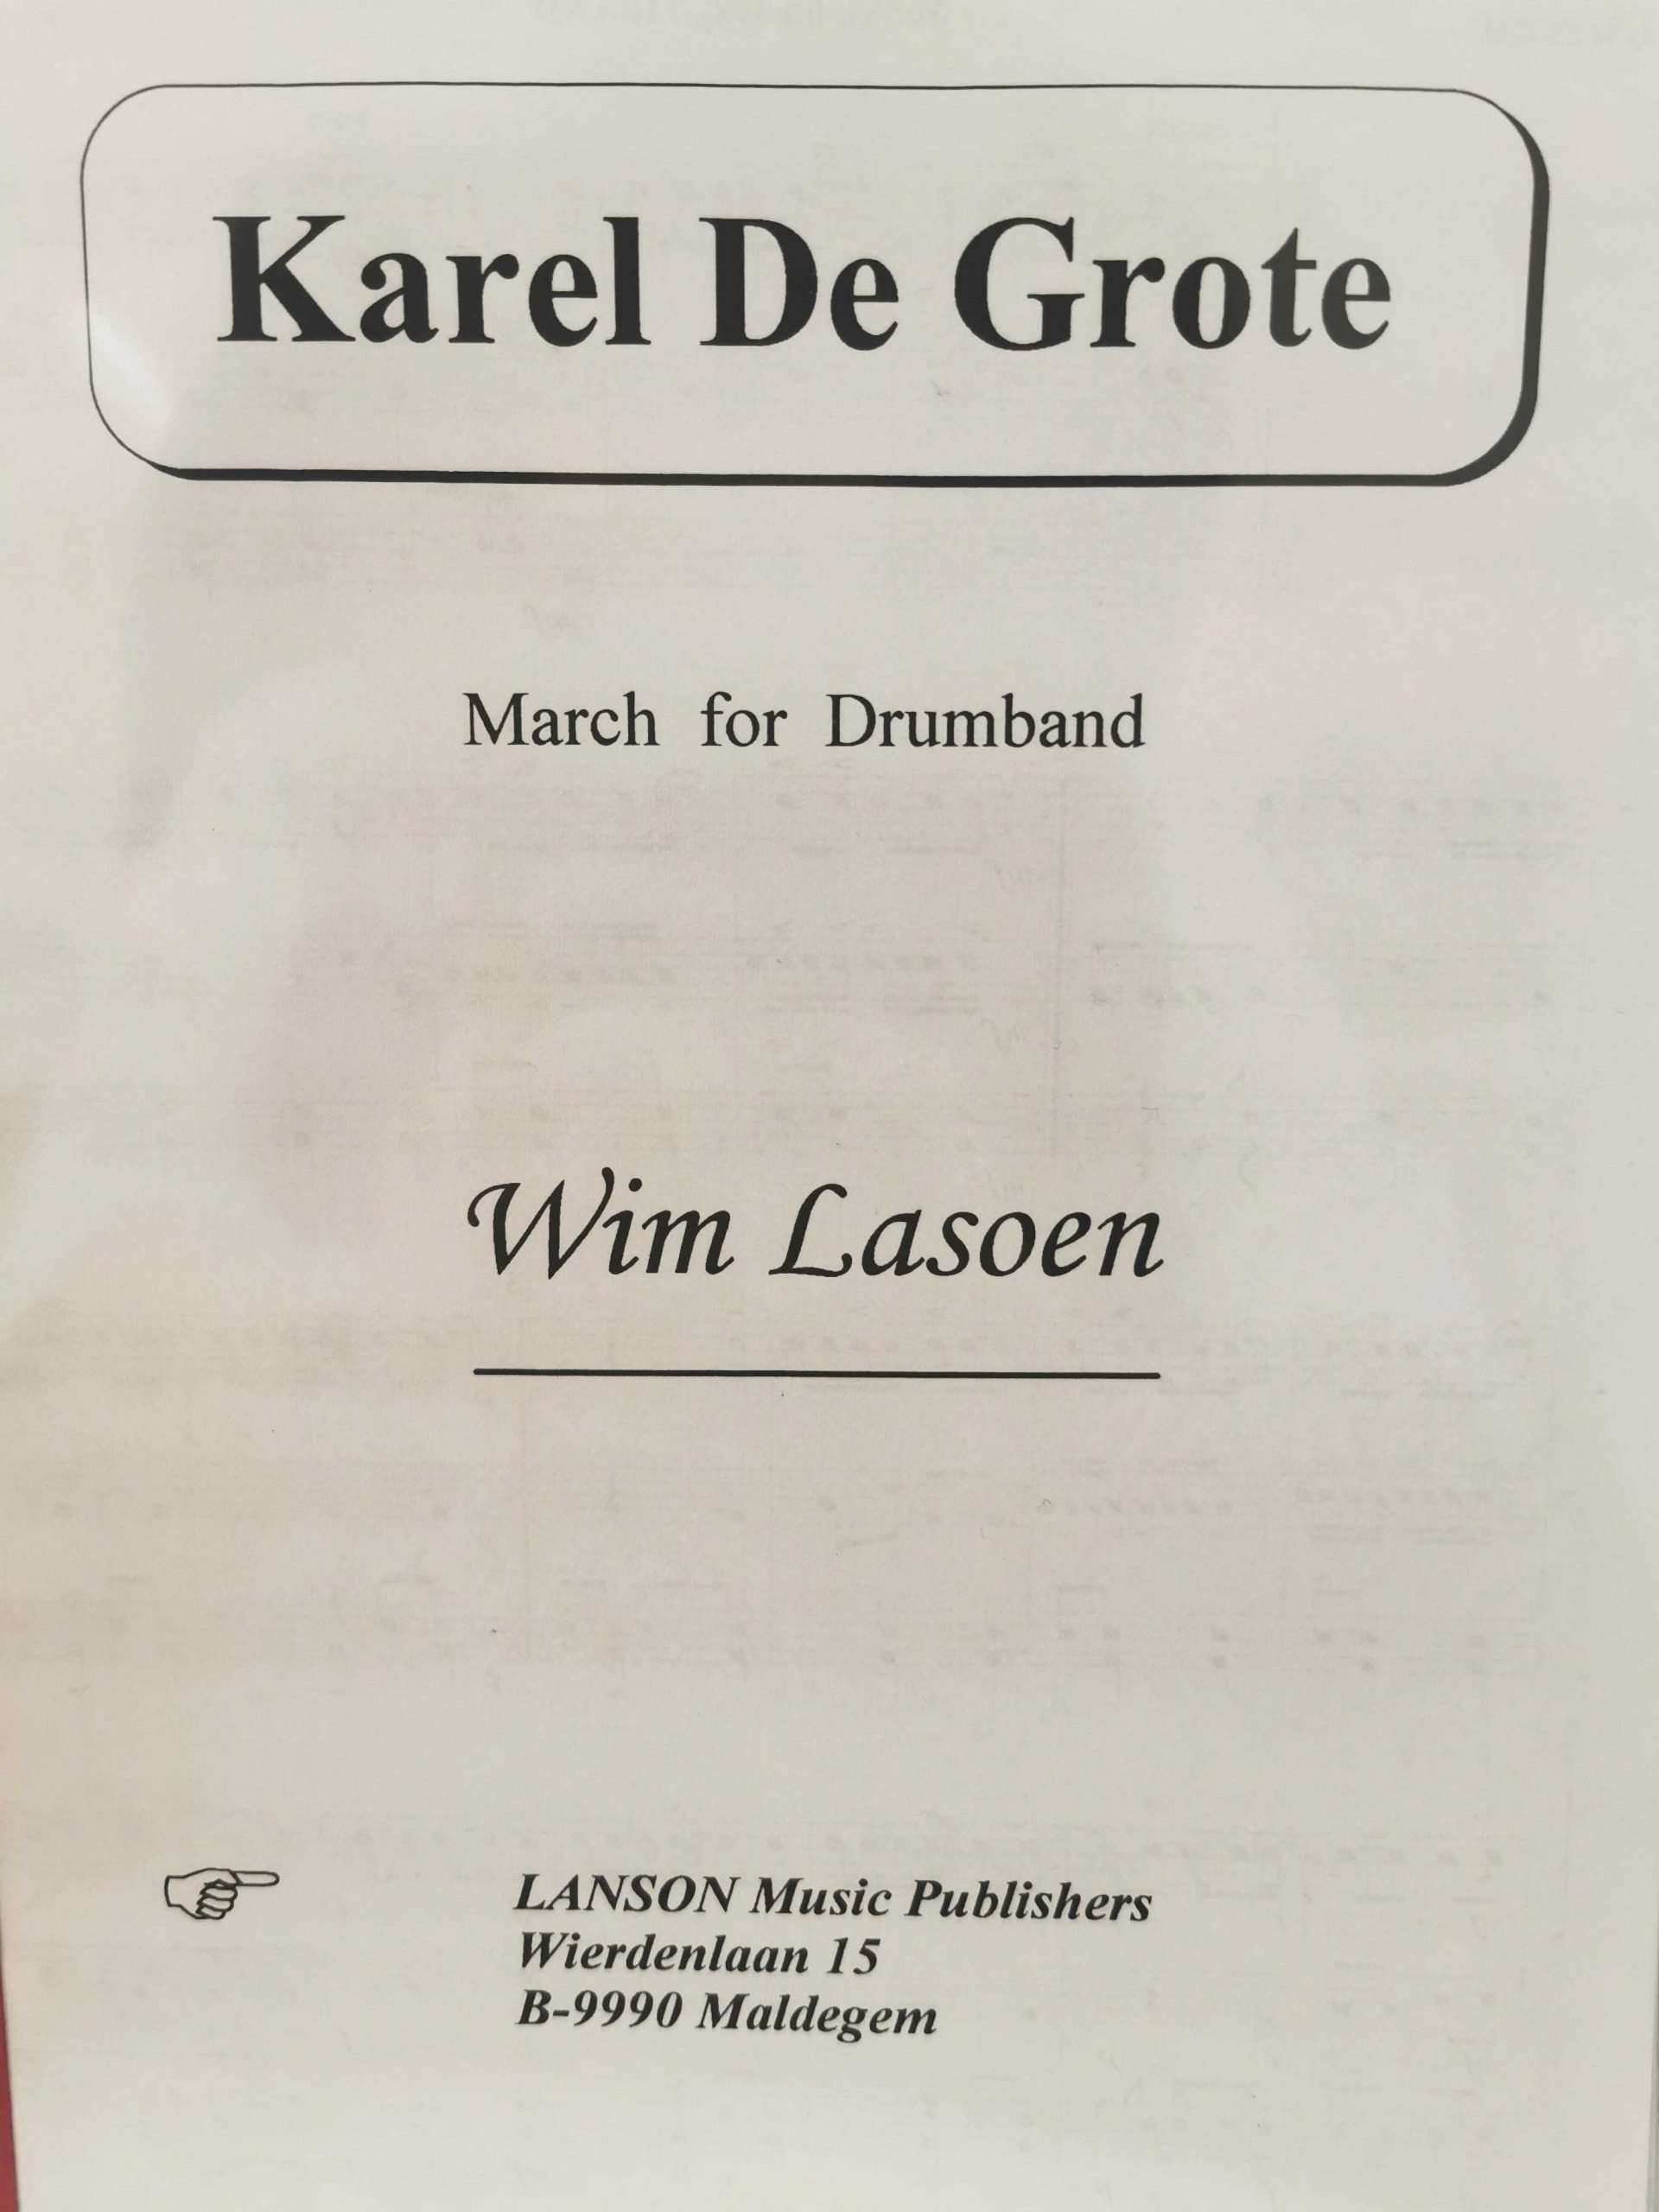 Karel De Grote by Wim Lasoen